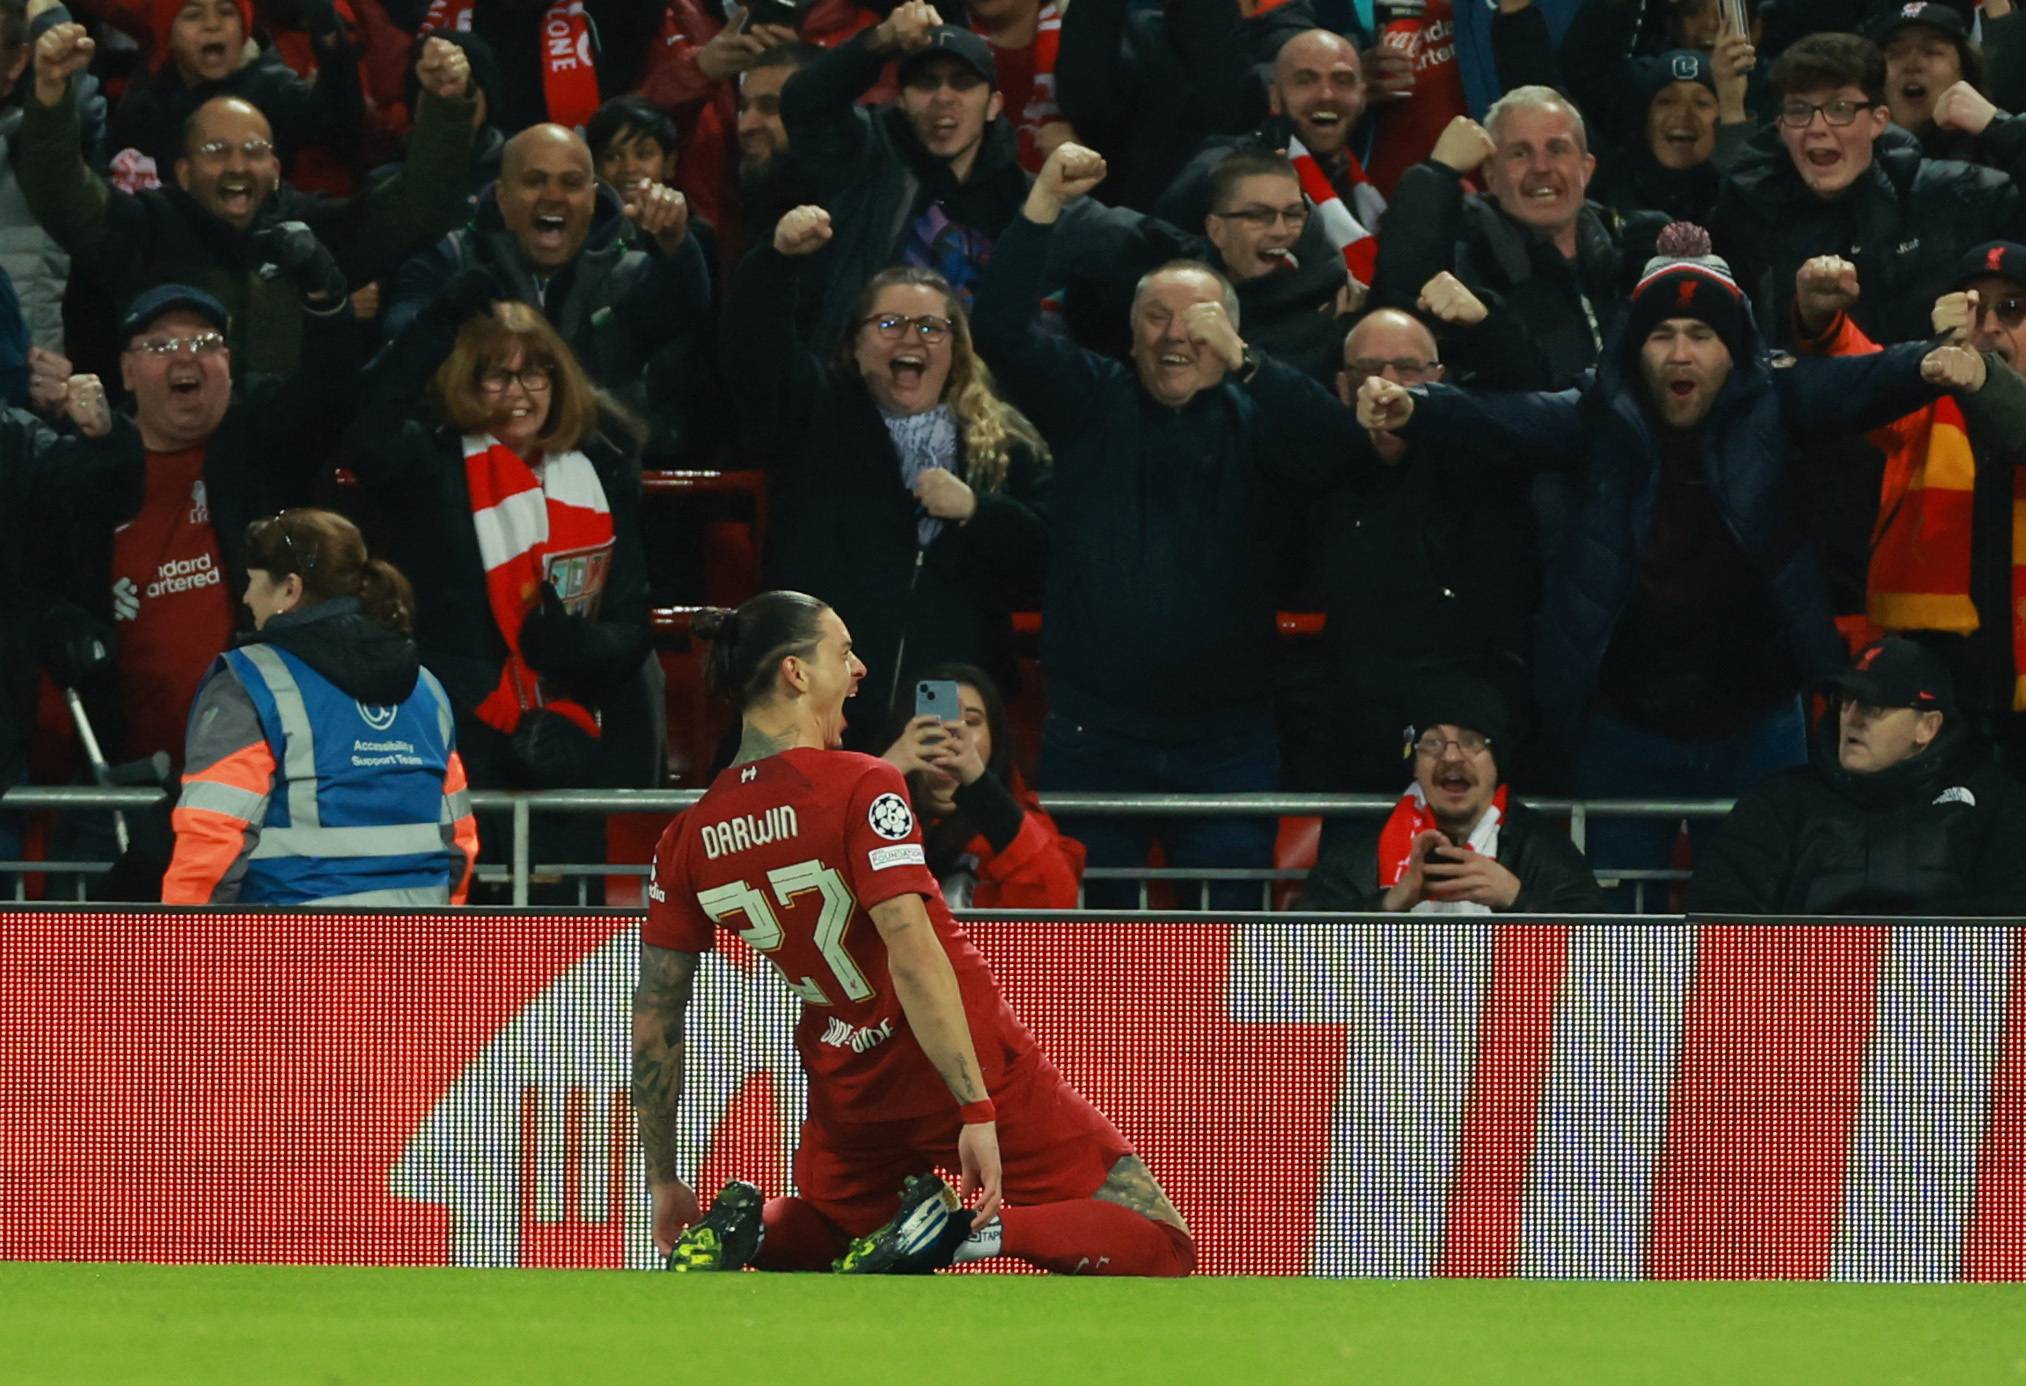 Liverpool: Media react to Darwin Nunez's 'class' goal vs Real Madrid - Liverpool News